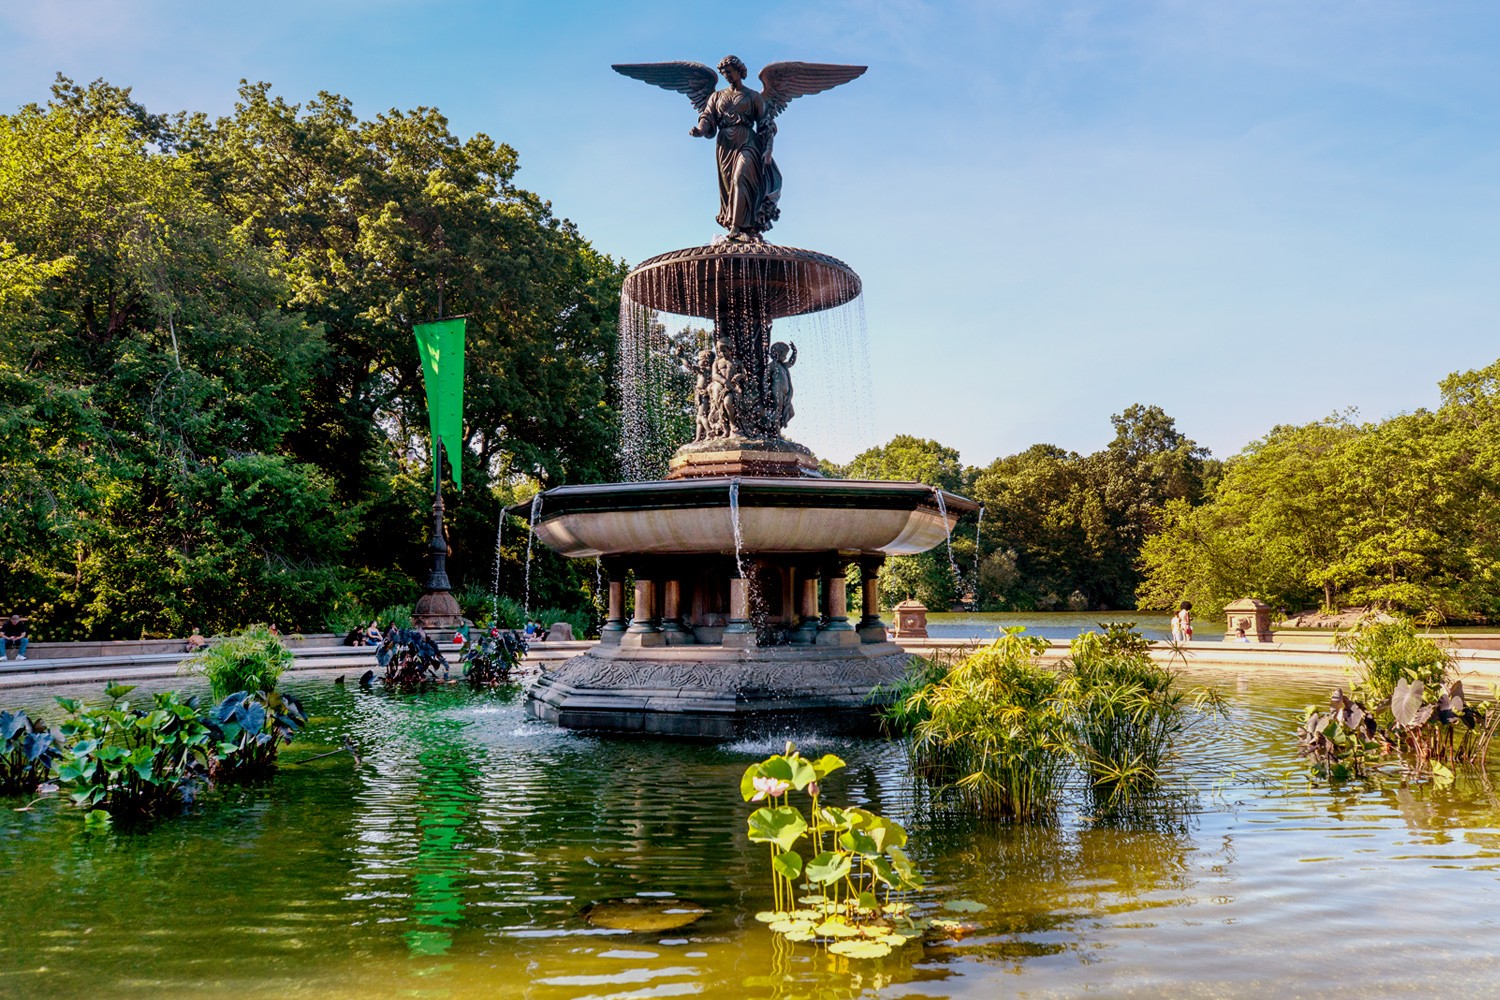 Bethesda Fountain in New York City